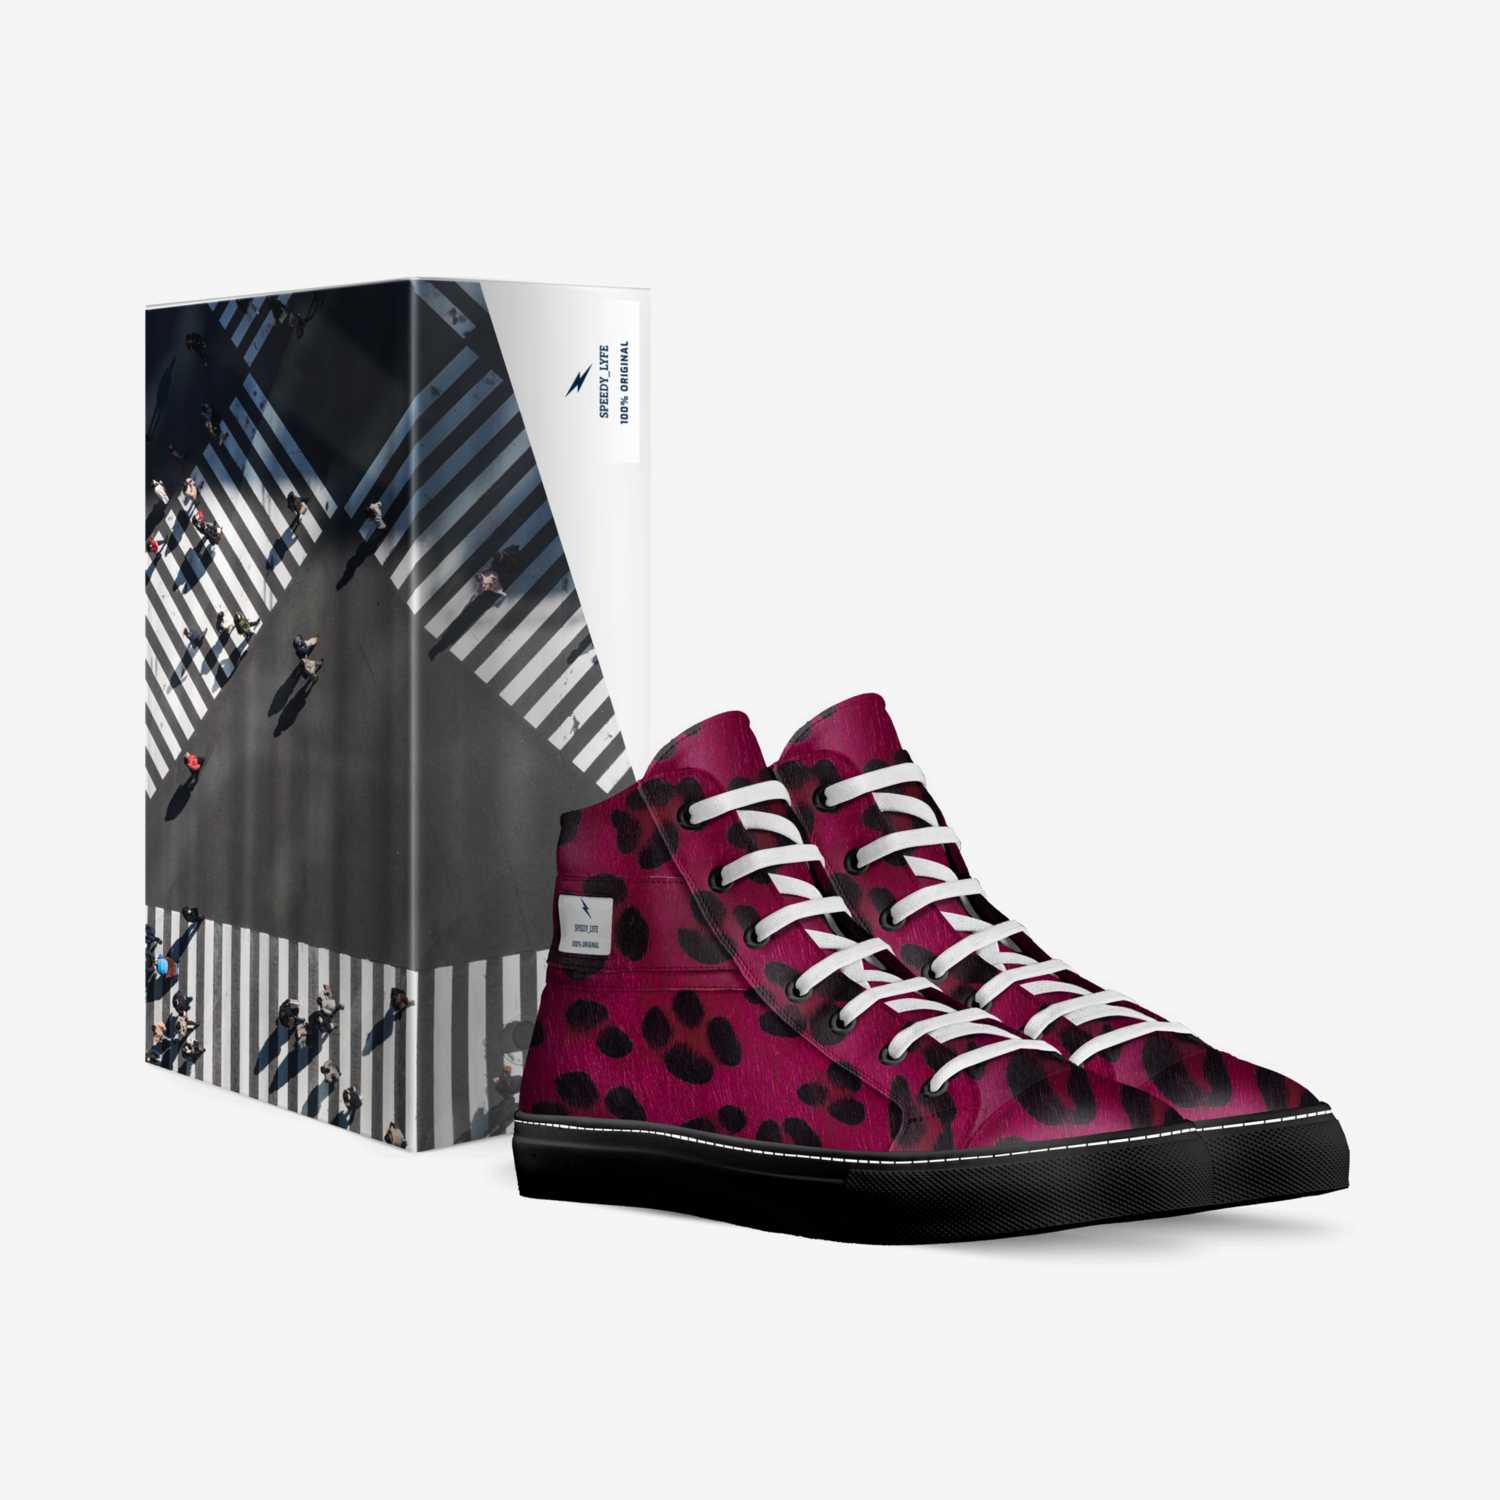 Speedy_lyfe custom made in Italy shoes by Warneka Jackson | Box view